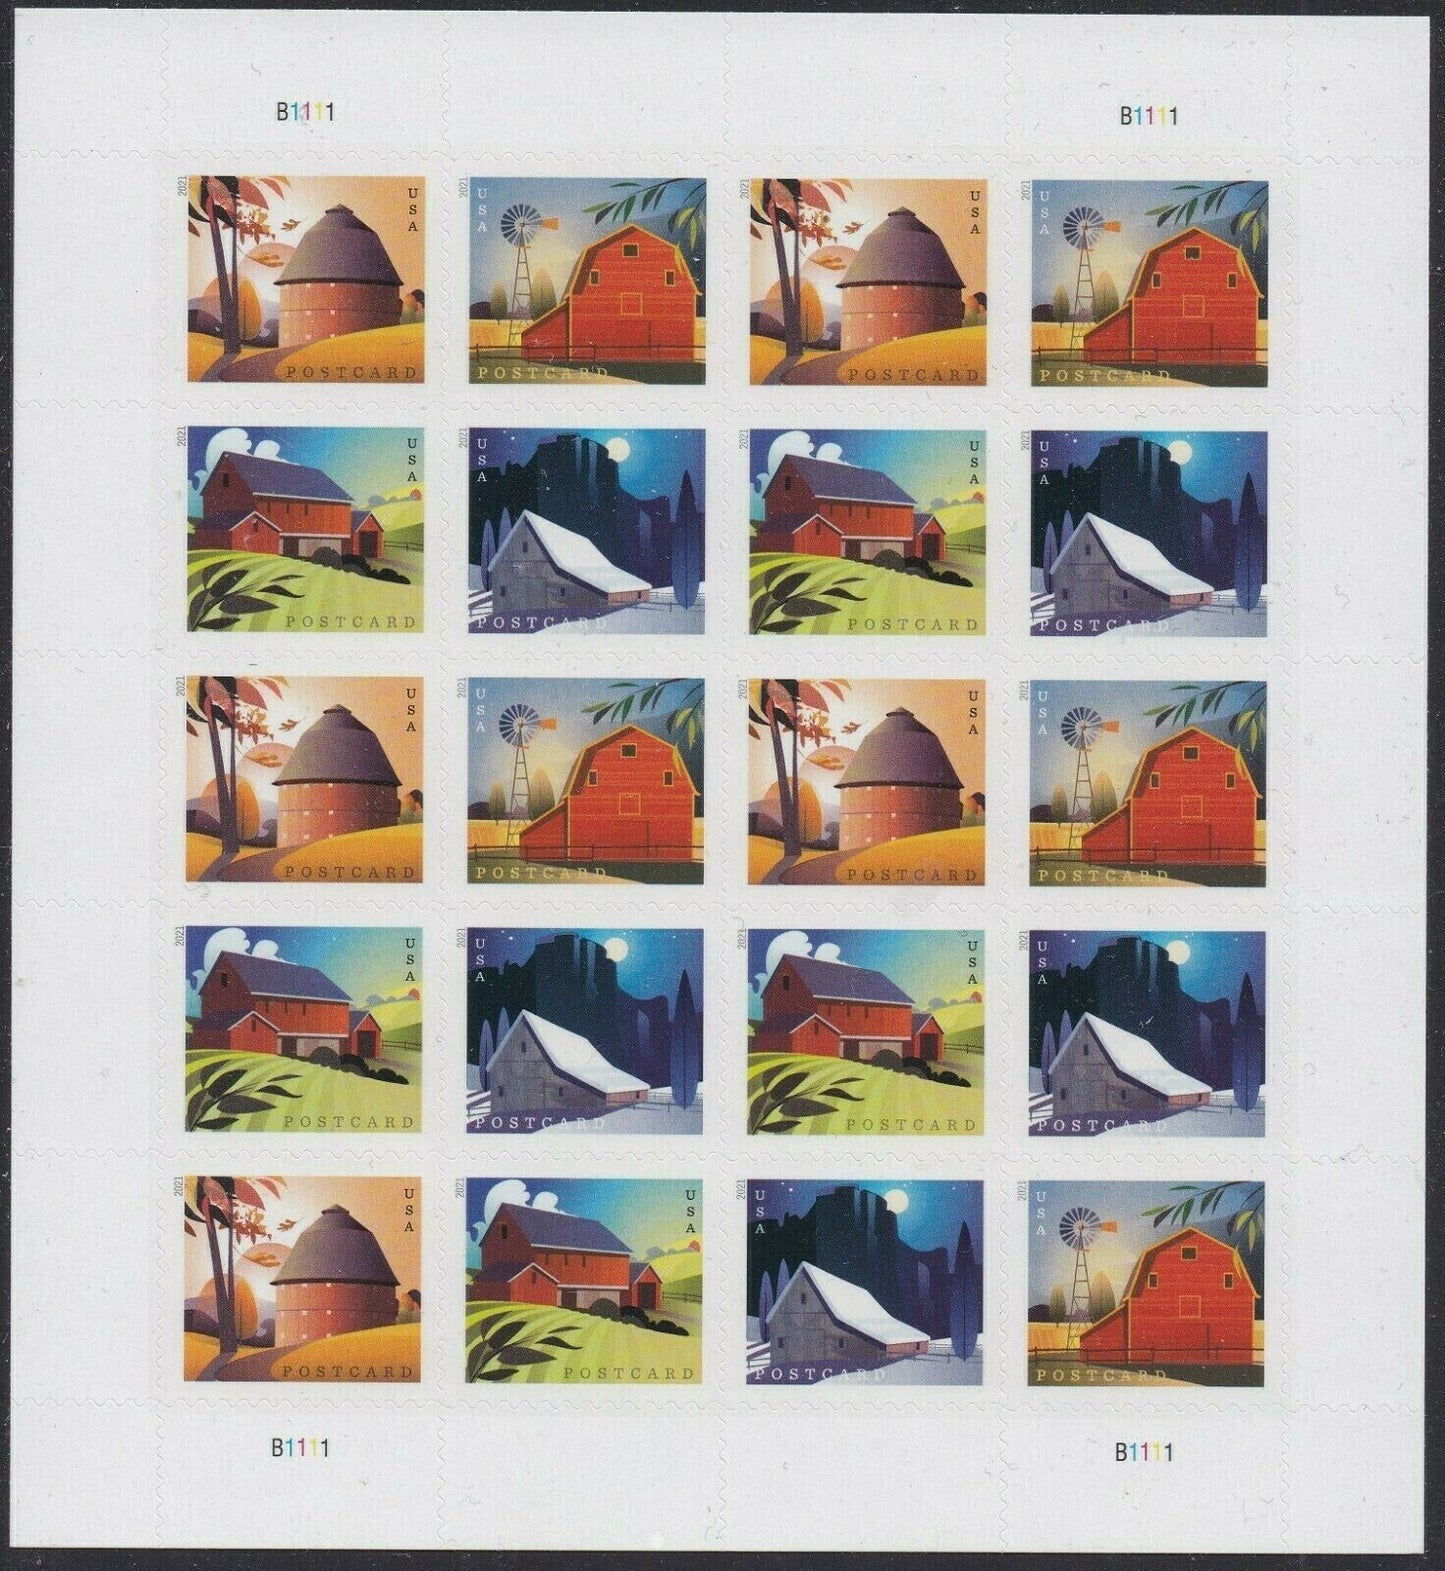 USPS Barn POSTCARD 2021 Forever Postage Stamps - Sheet of 20 Postage Stamps